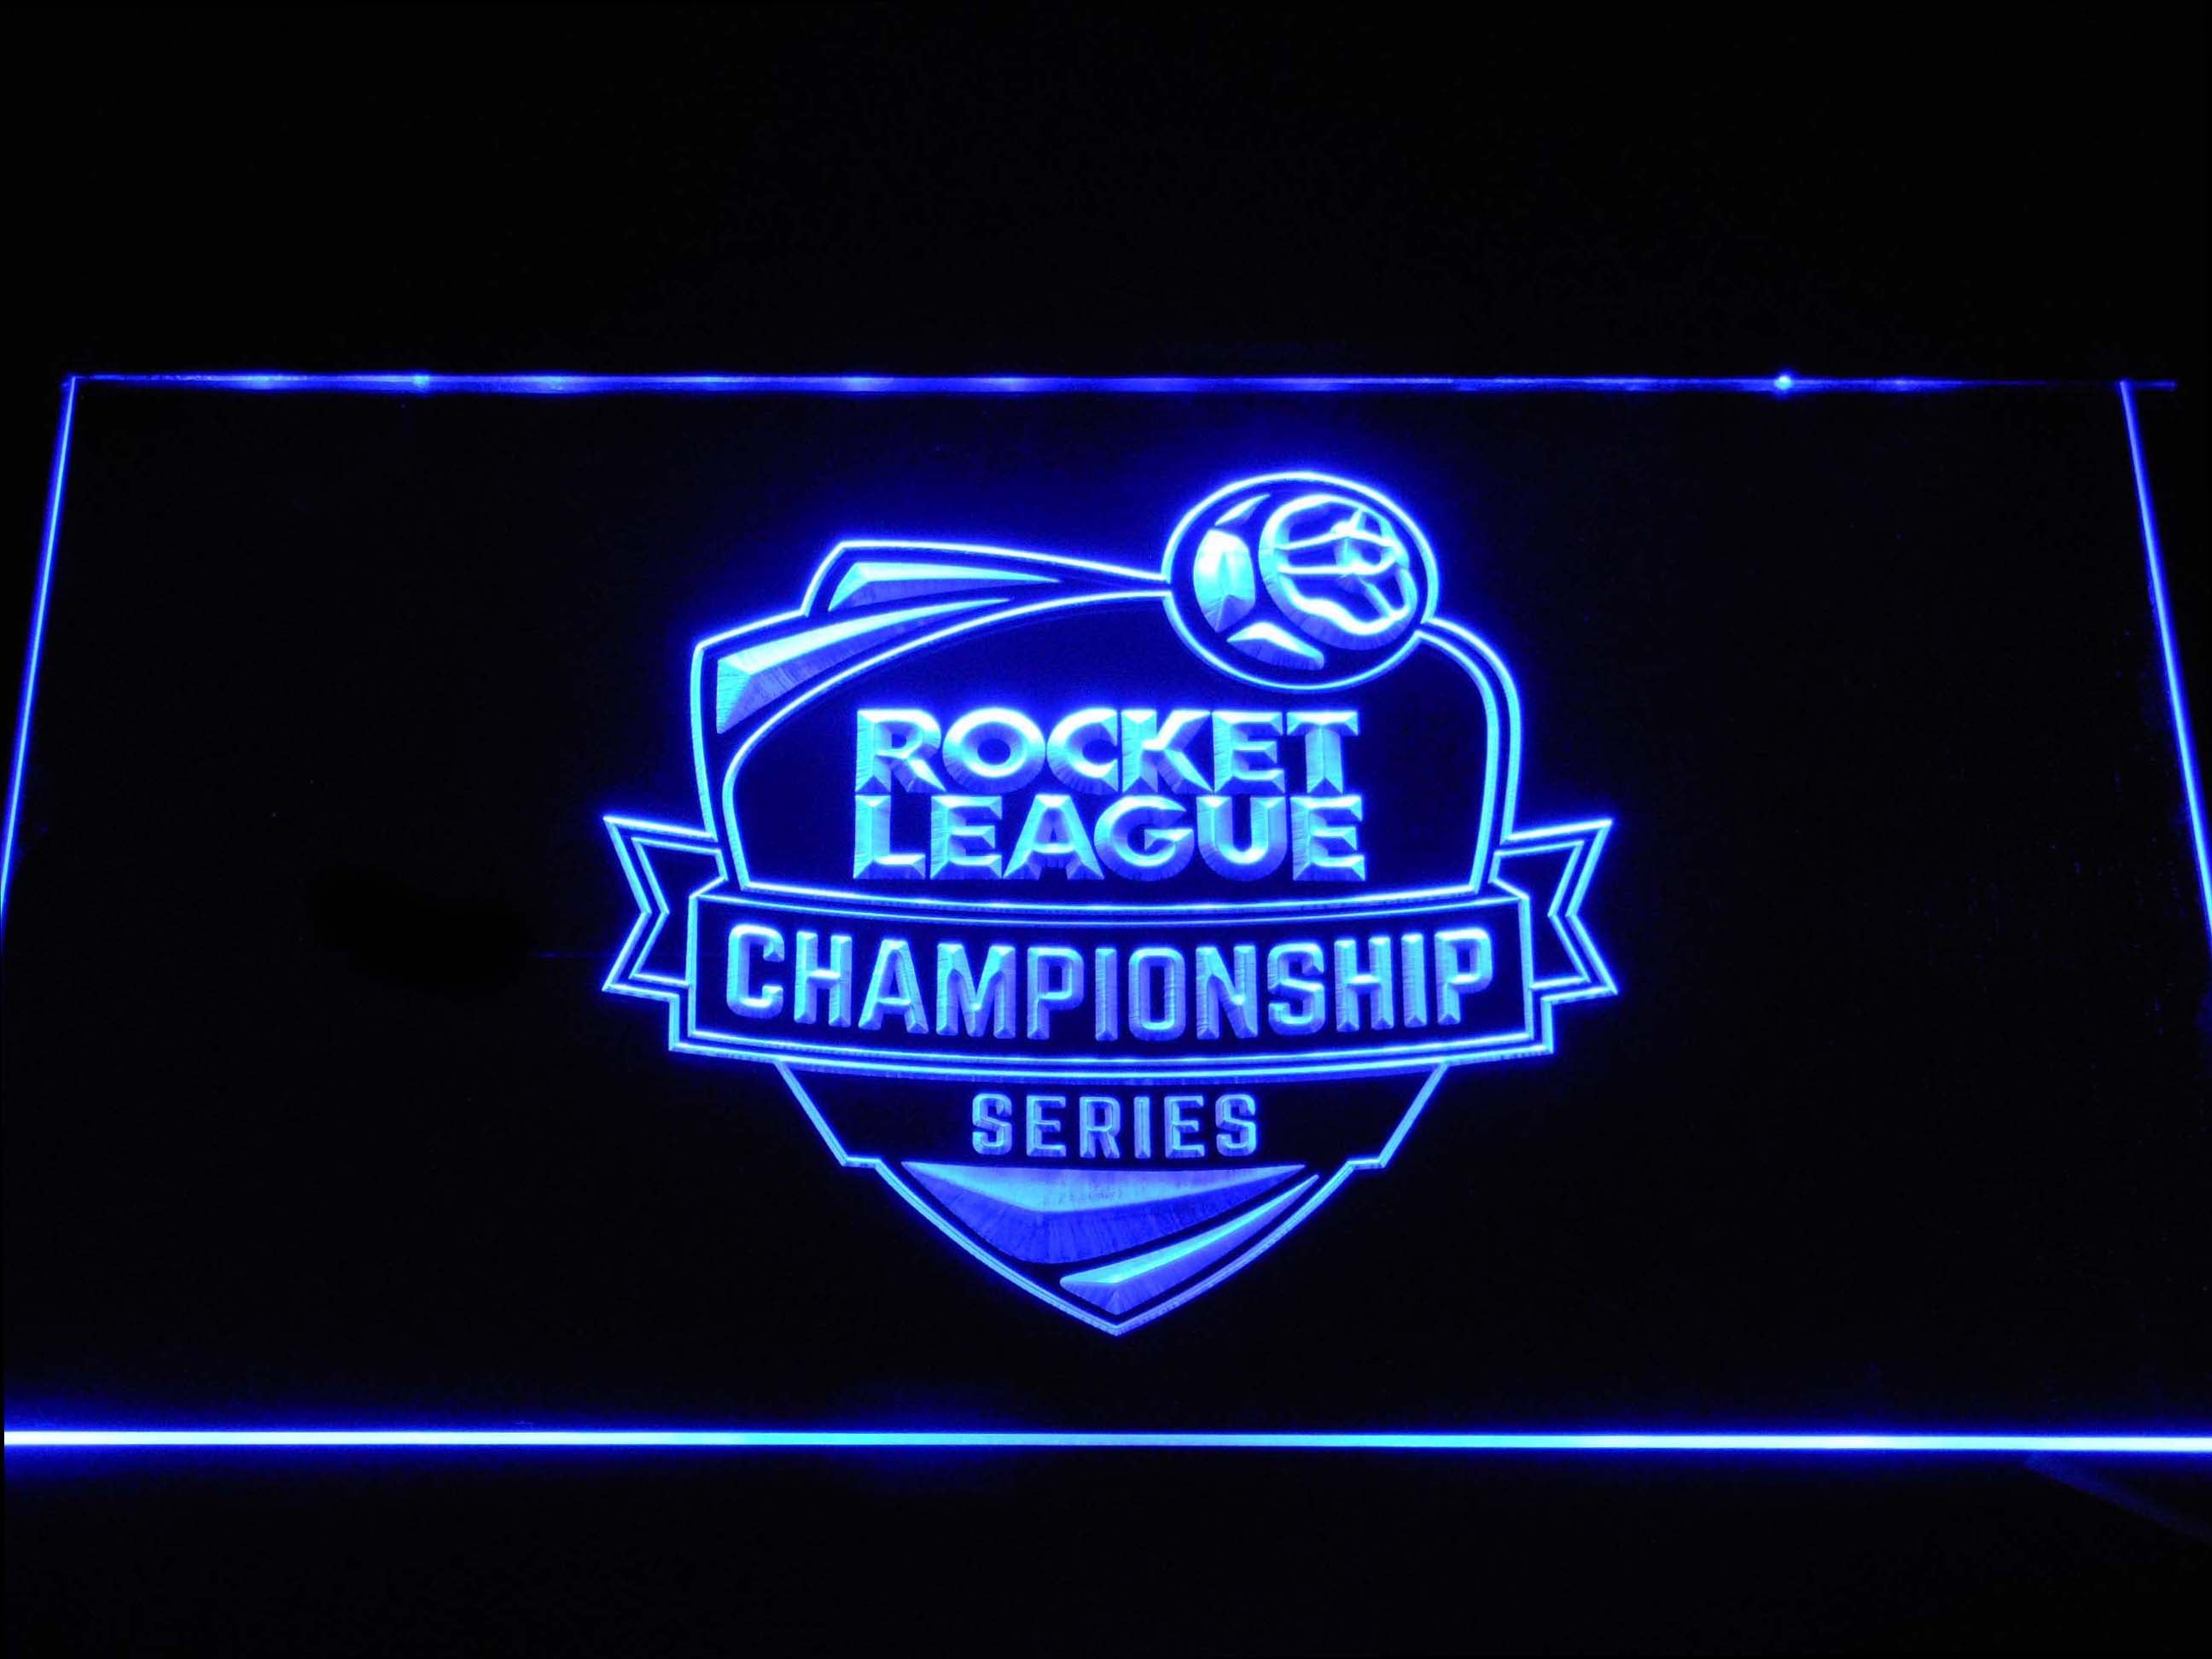 Rocket League Championship Series Neon Light LED Sign